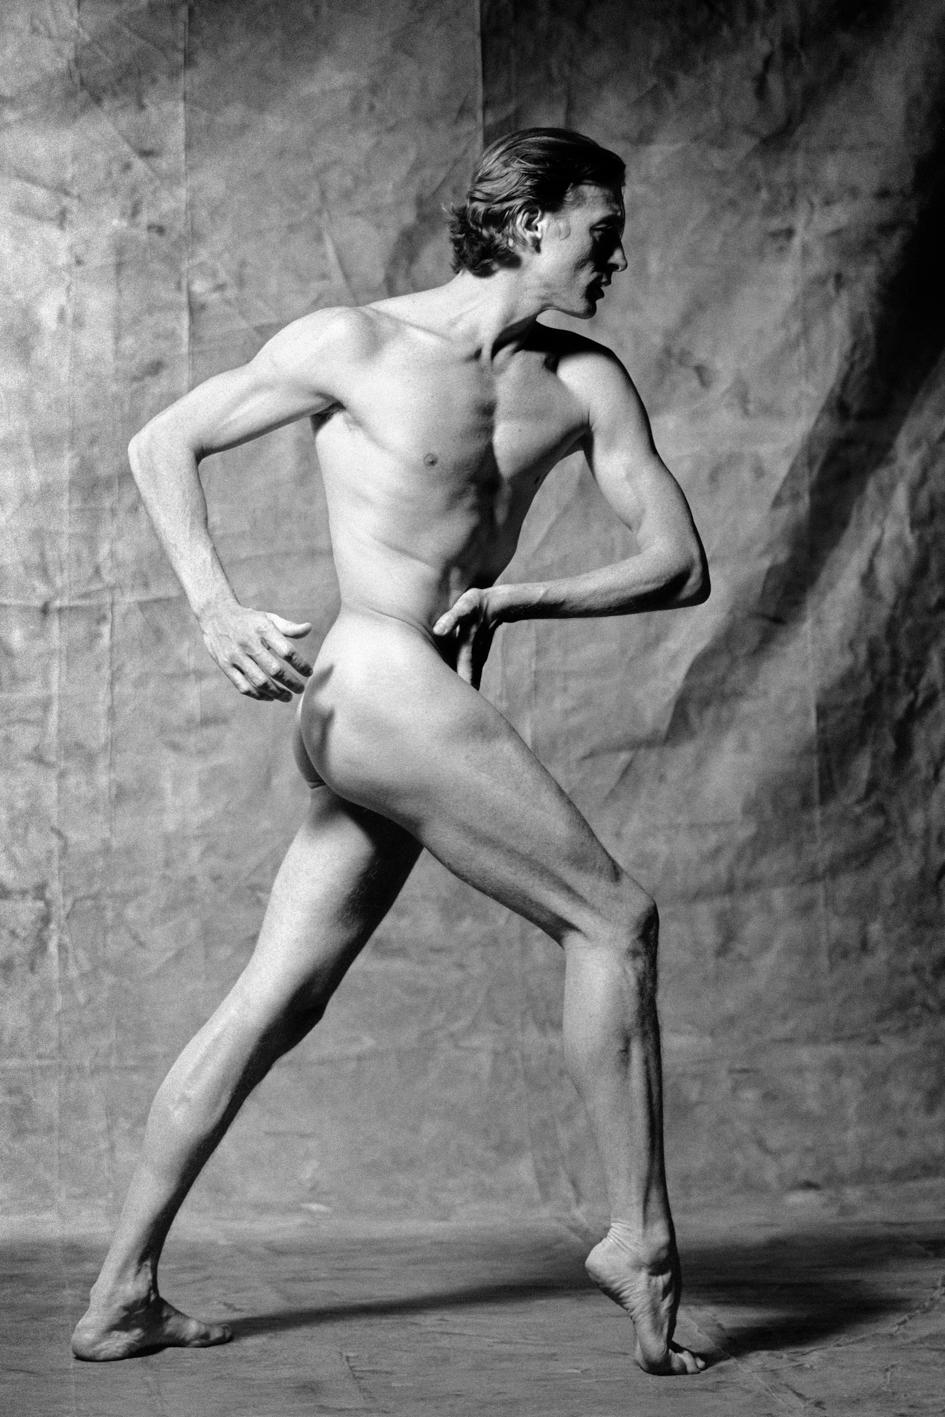 Naked man posing like a Greek statue